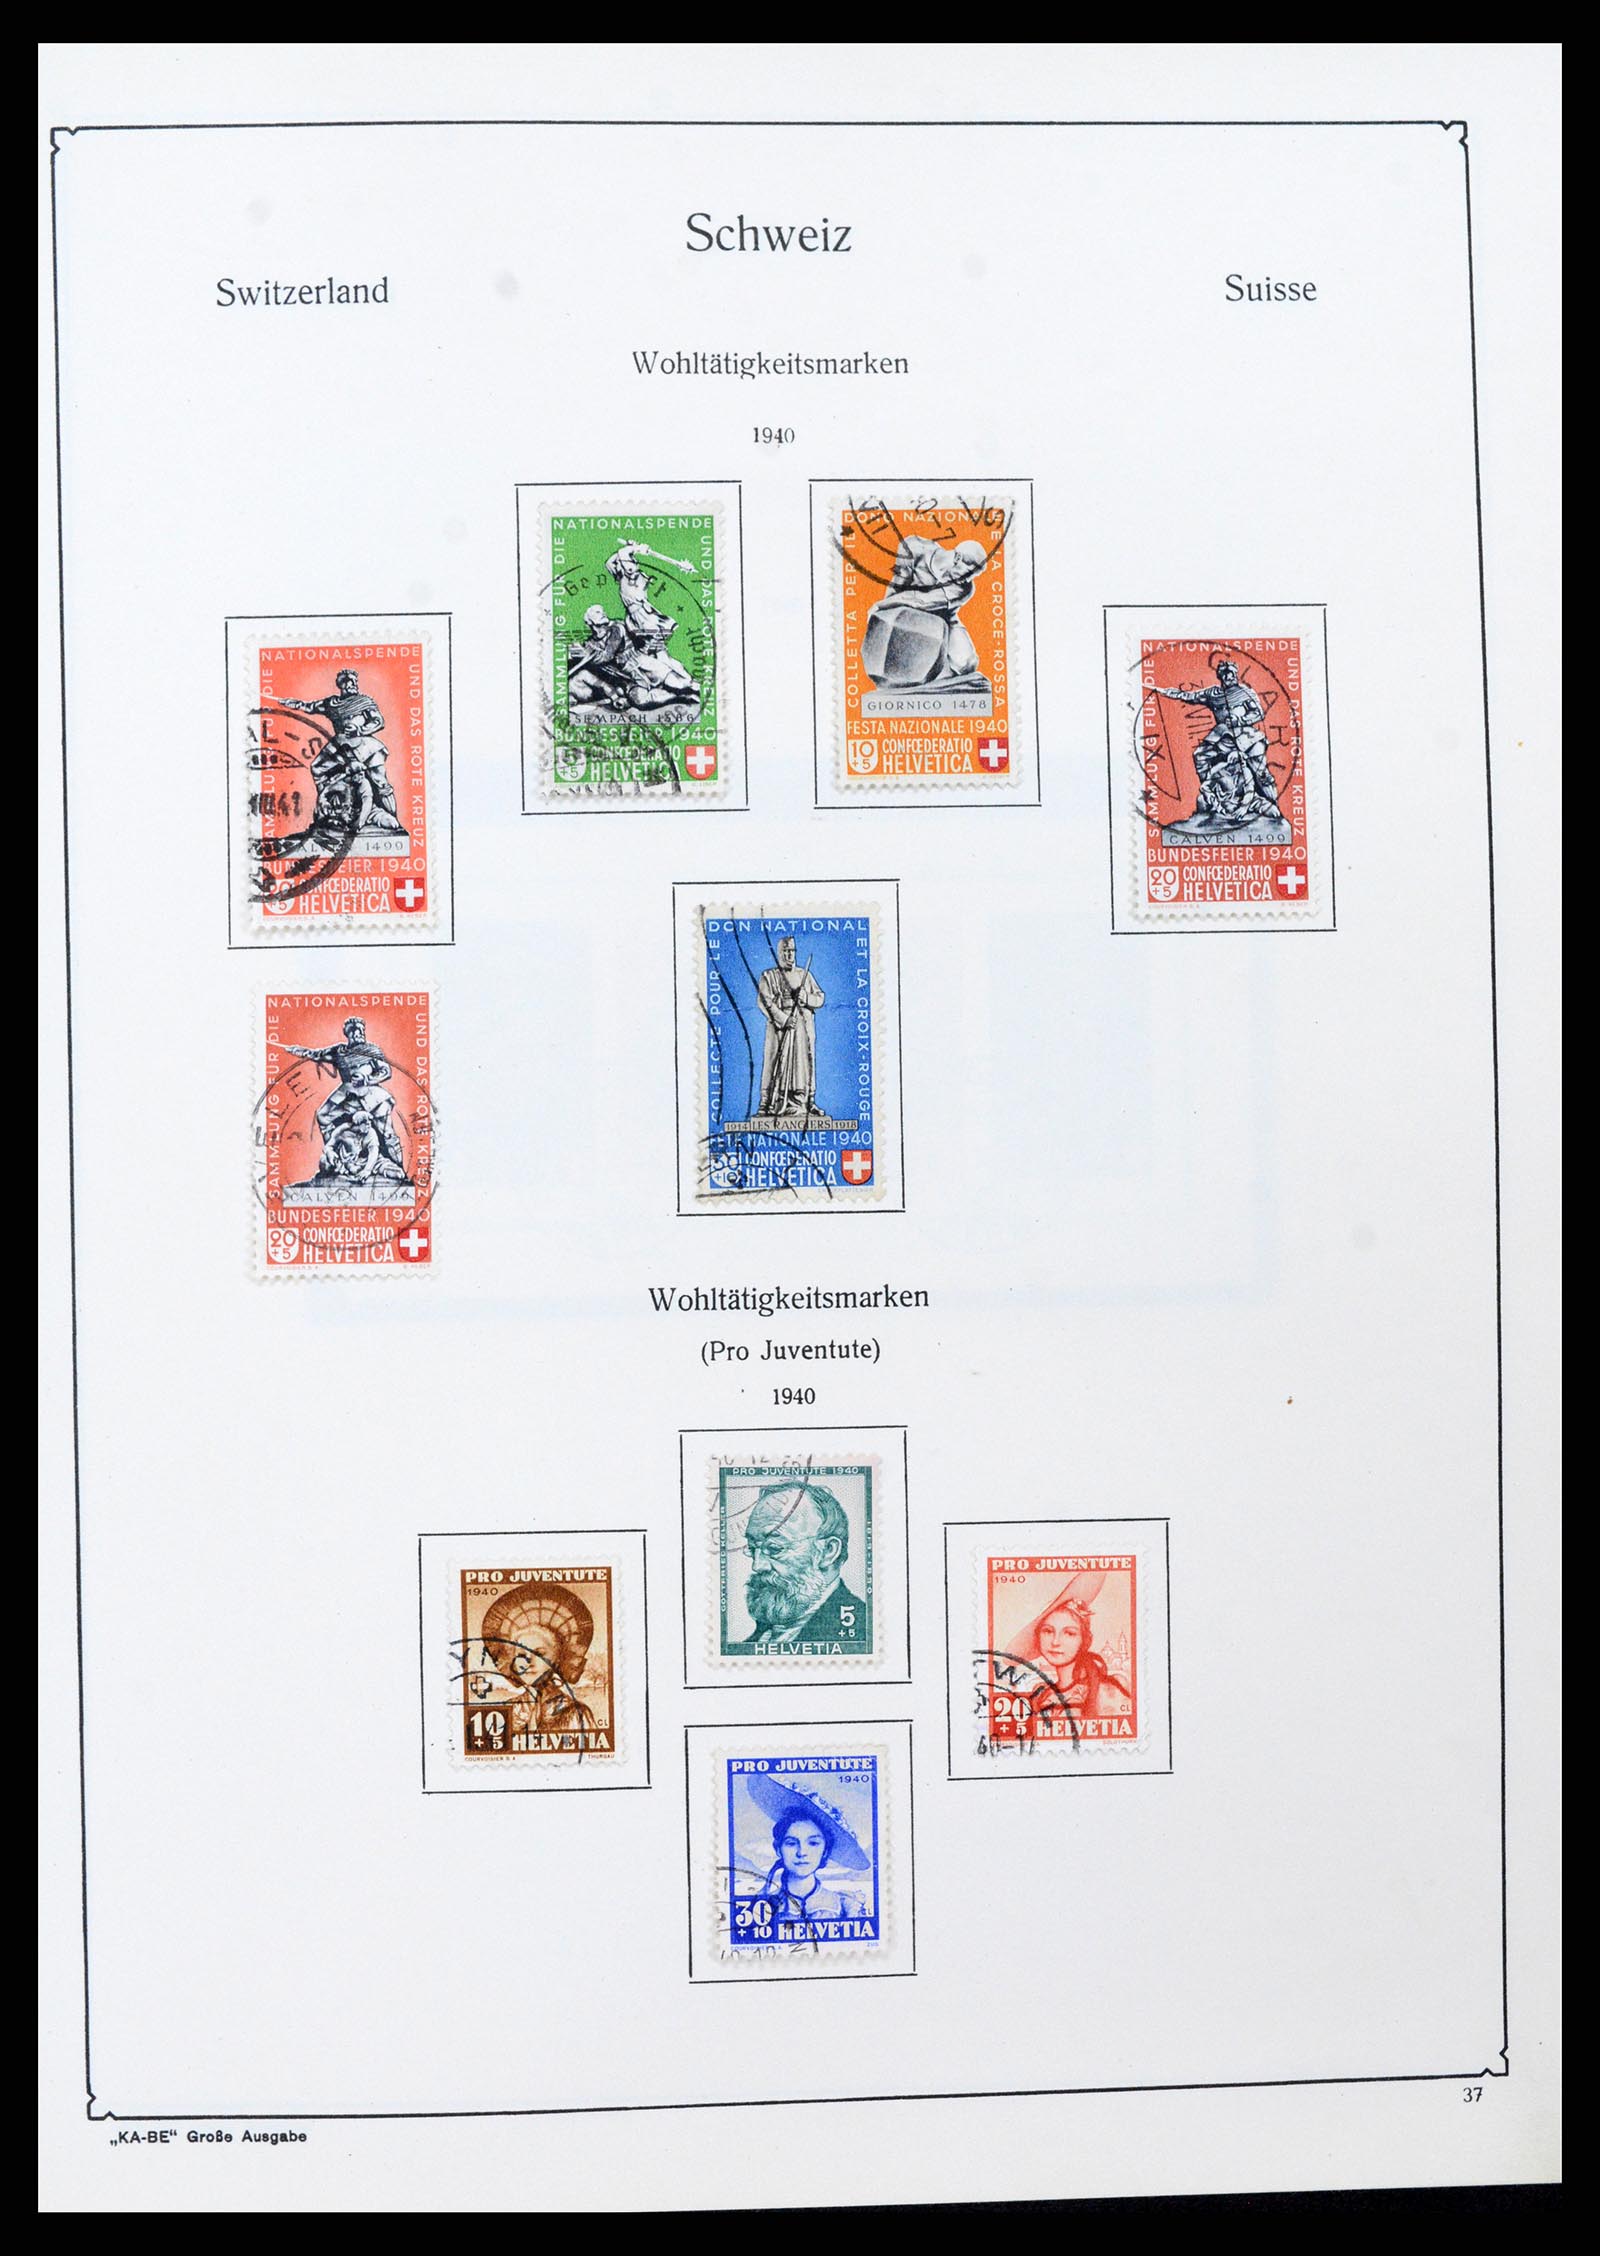 37588 036 - Stamp collection 37588 Switzerland 1854-1974.